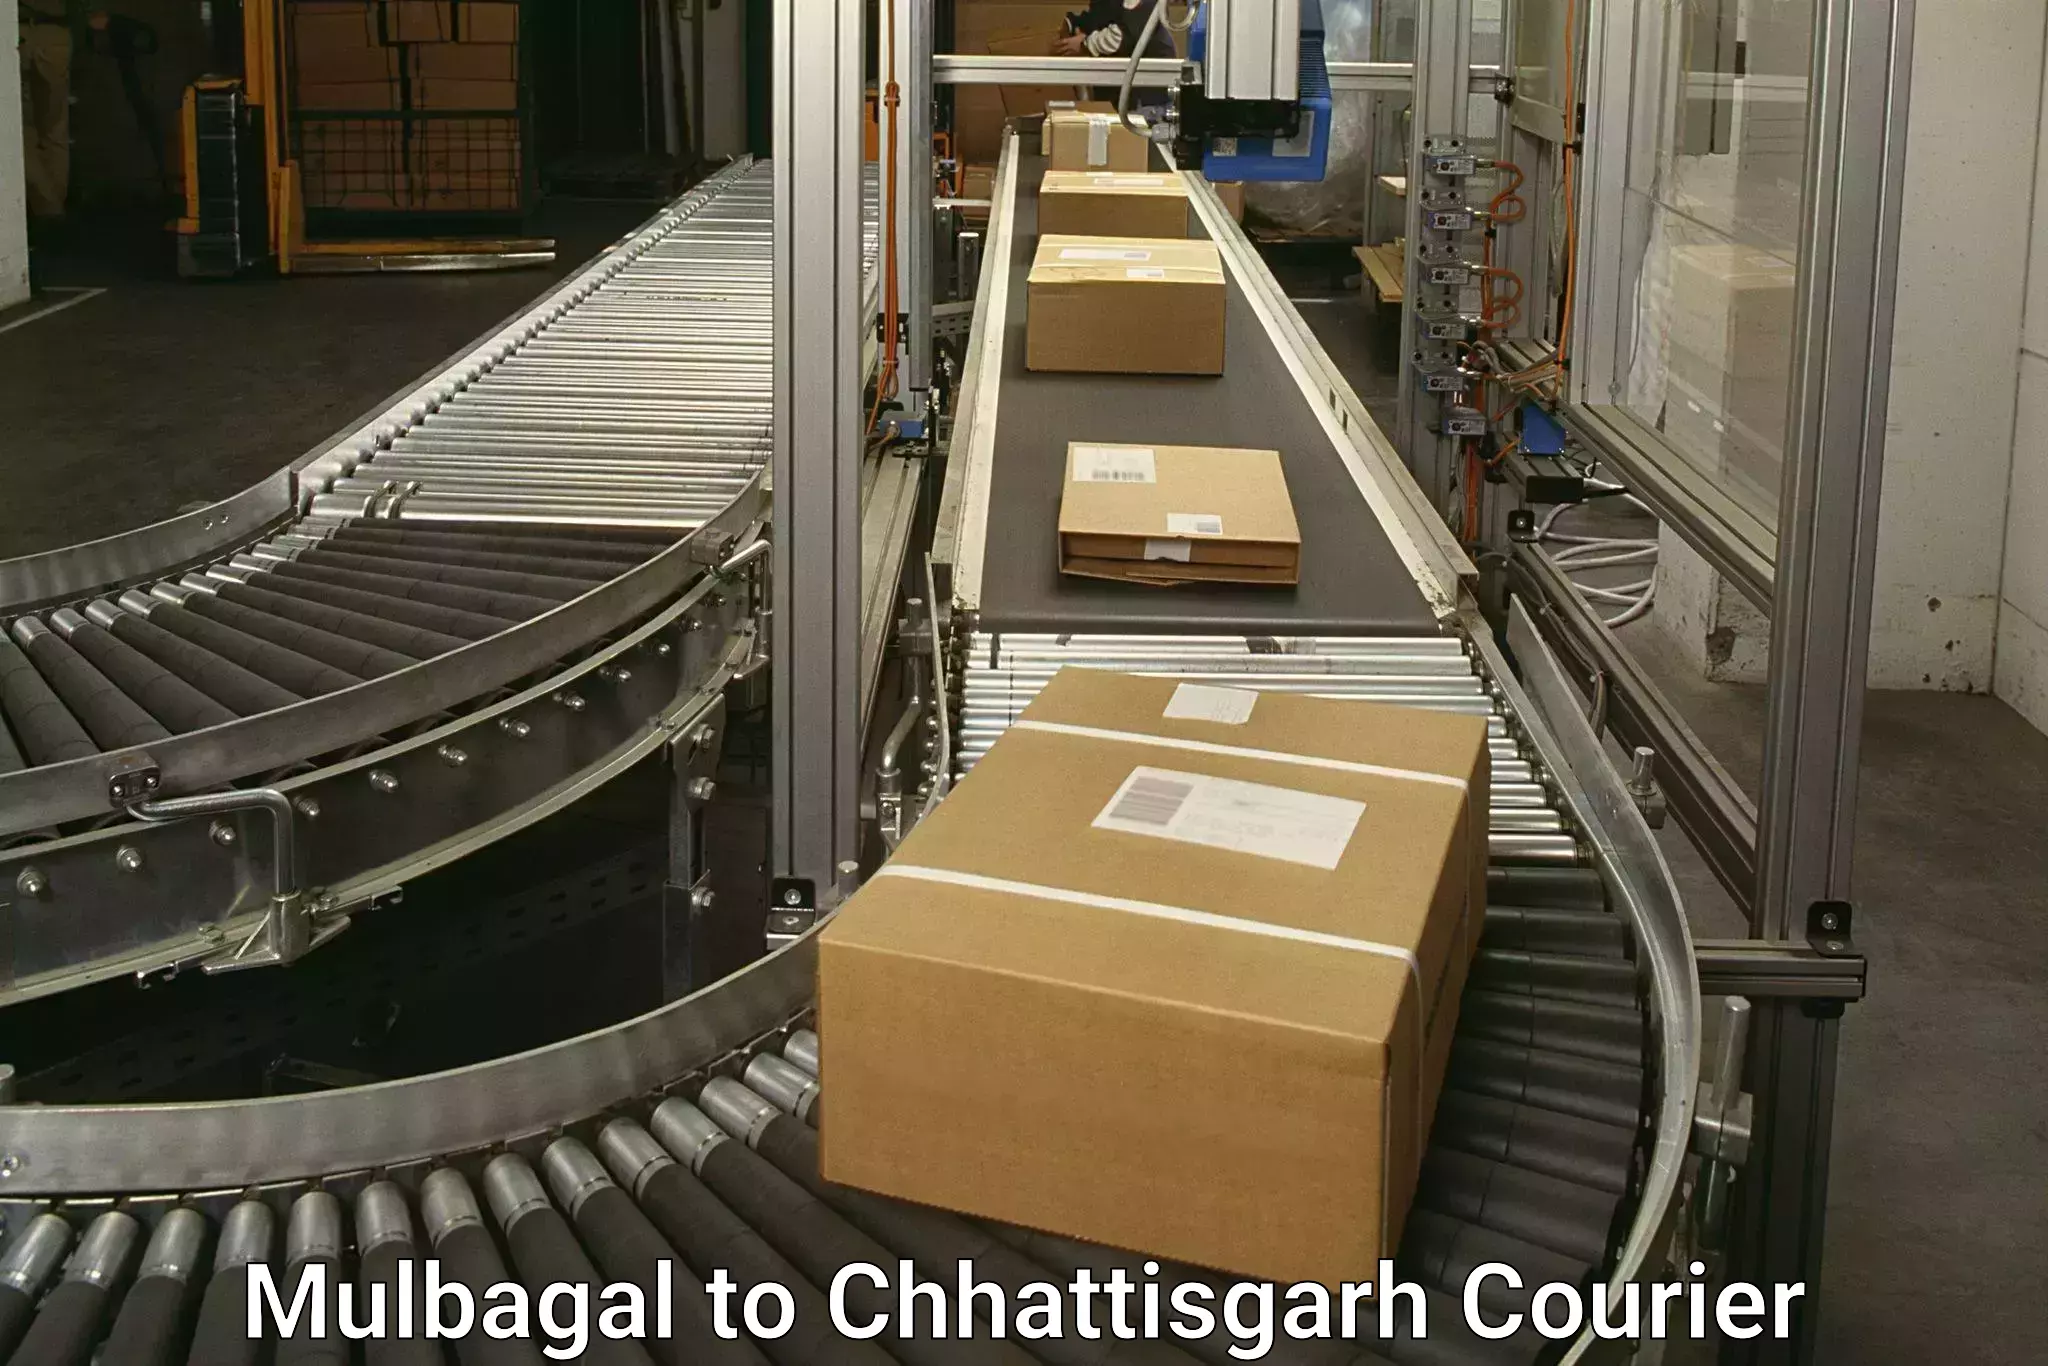 Courier service comparison Mulbagal to Ramanujganj